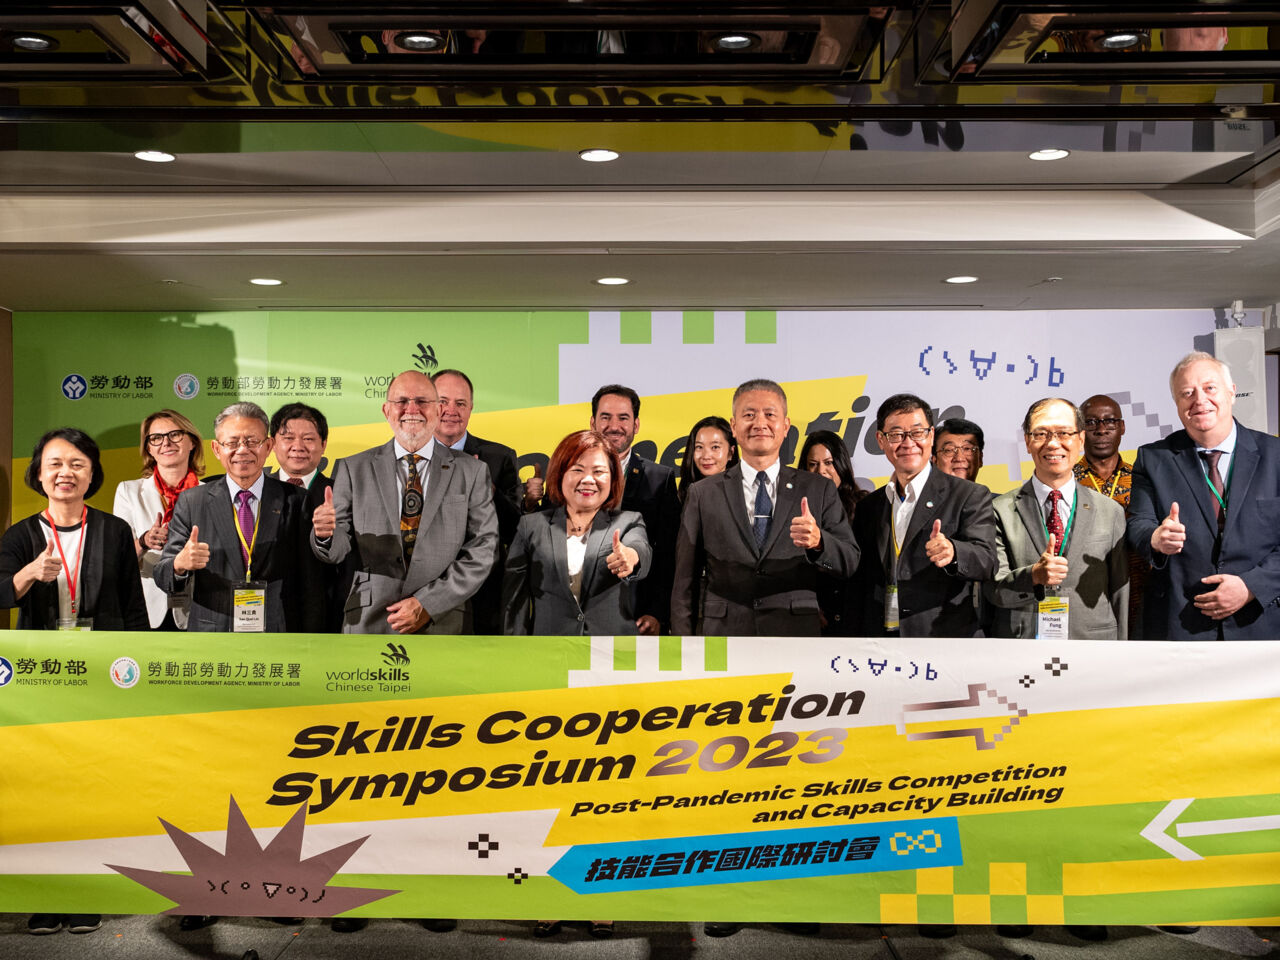 Chinese Taipei advancing to the future of skills